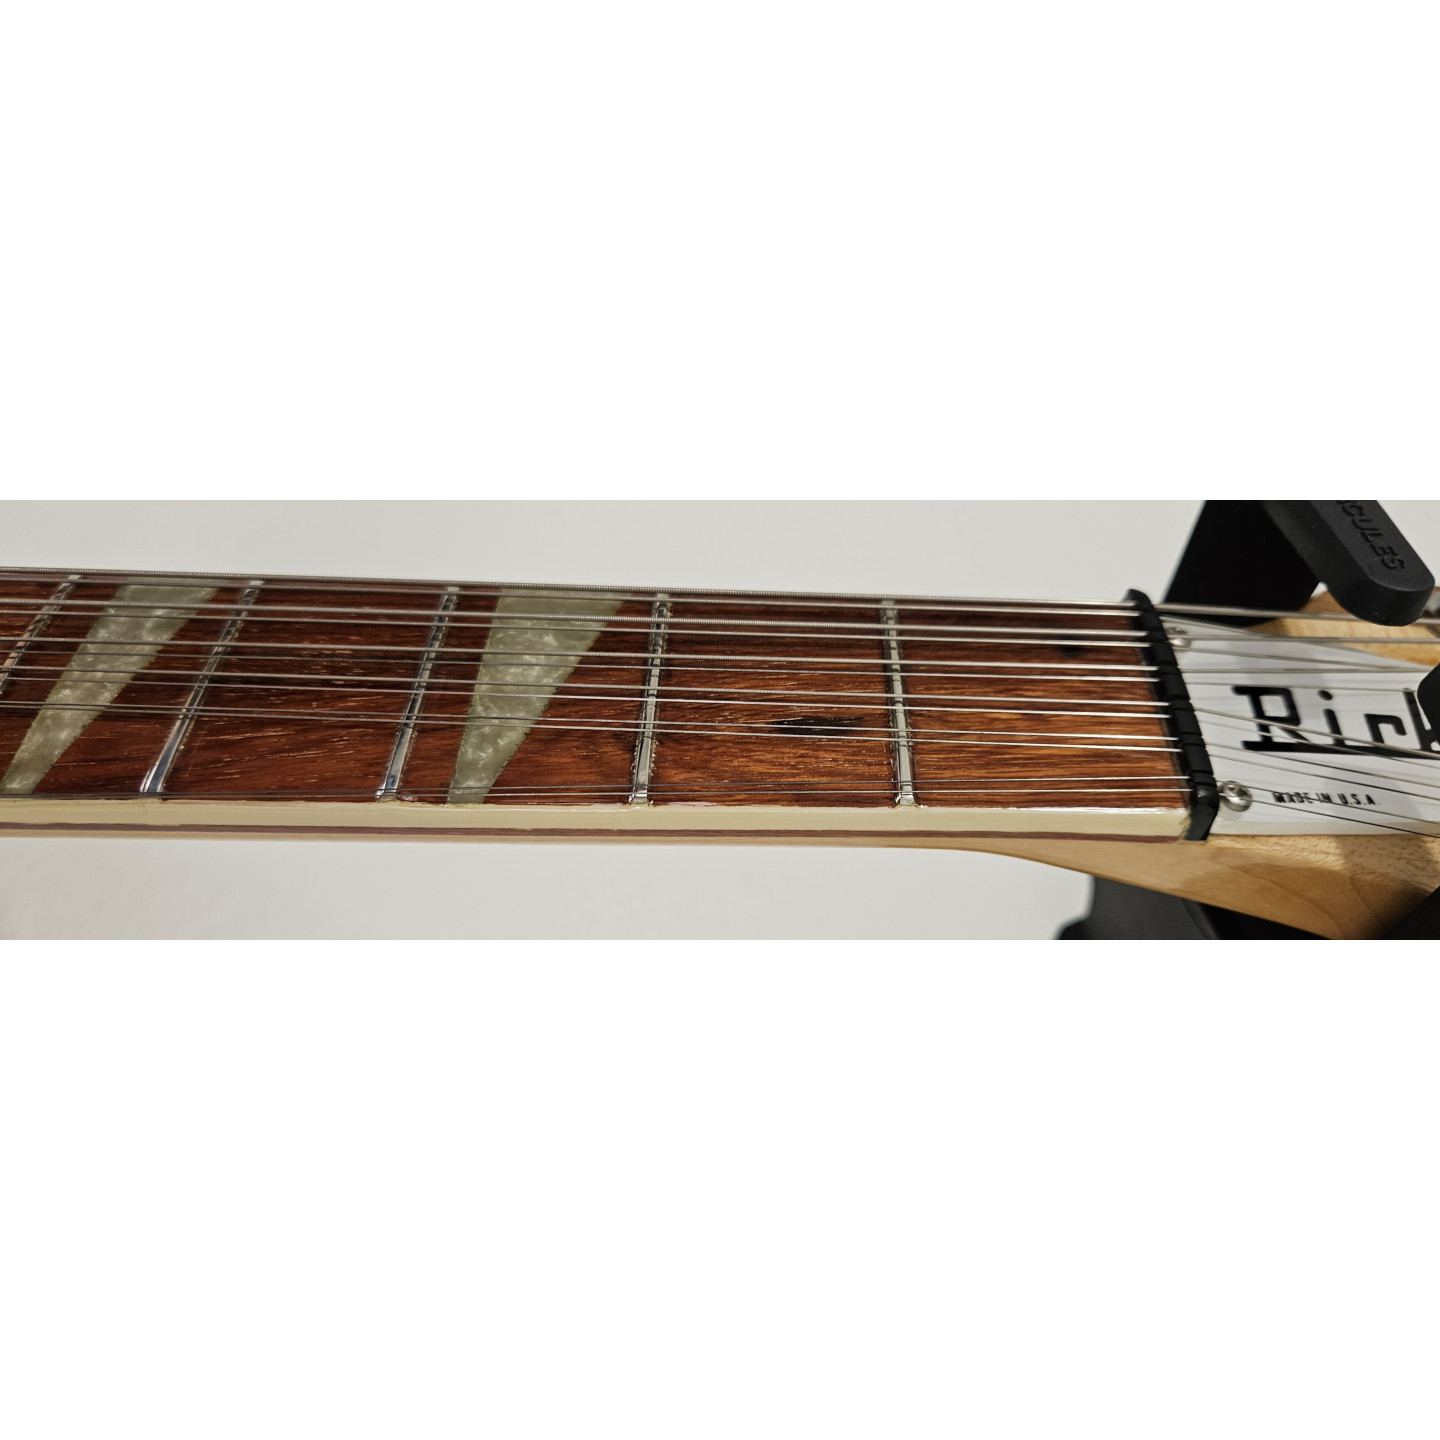 1988 Rickenbacker 370/12RM Roger Mcguinn Limited Edition Byrd 12-String Mapleglo Vintage Electric Guitar